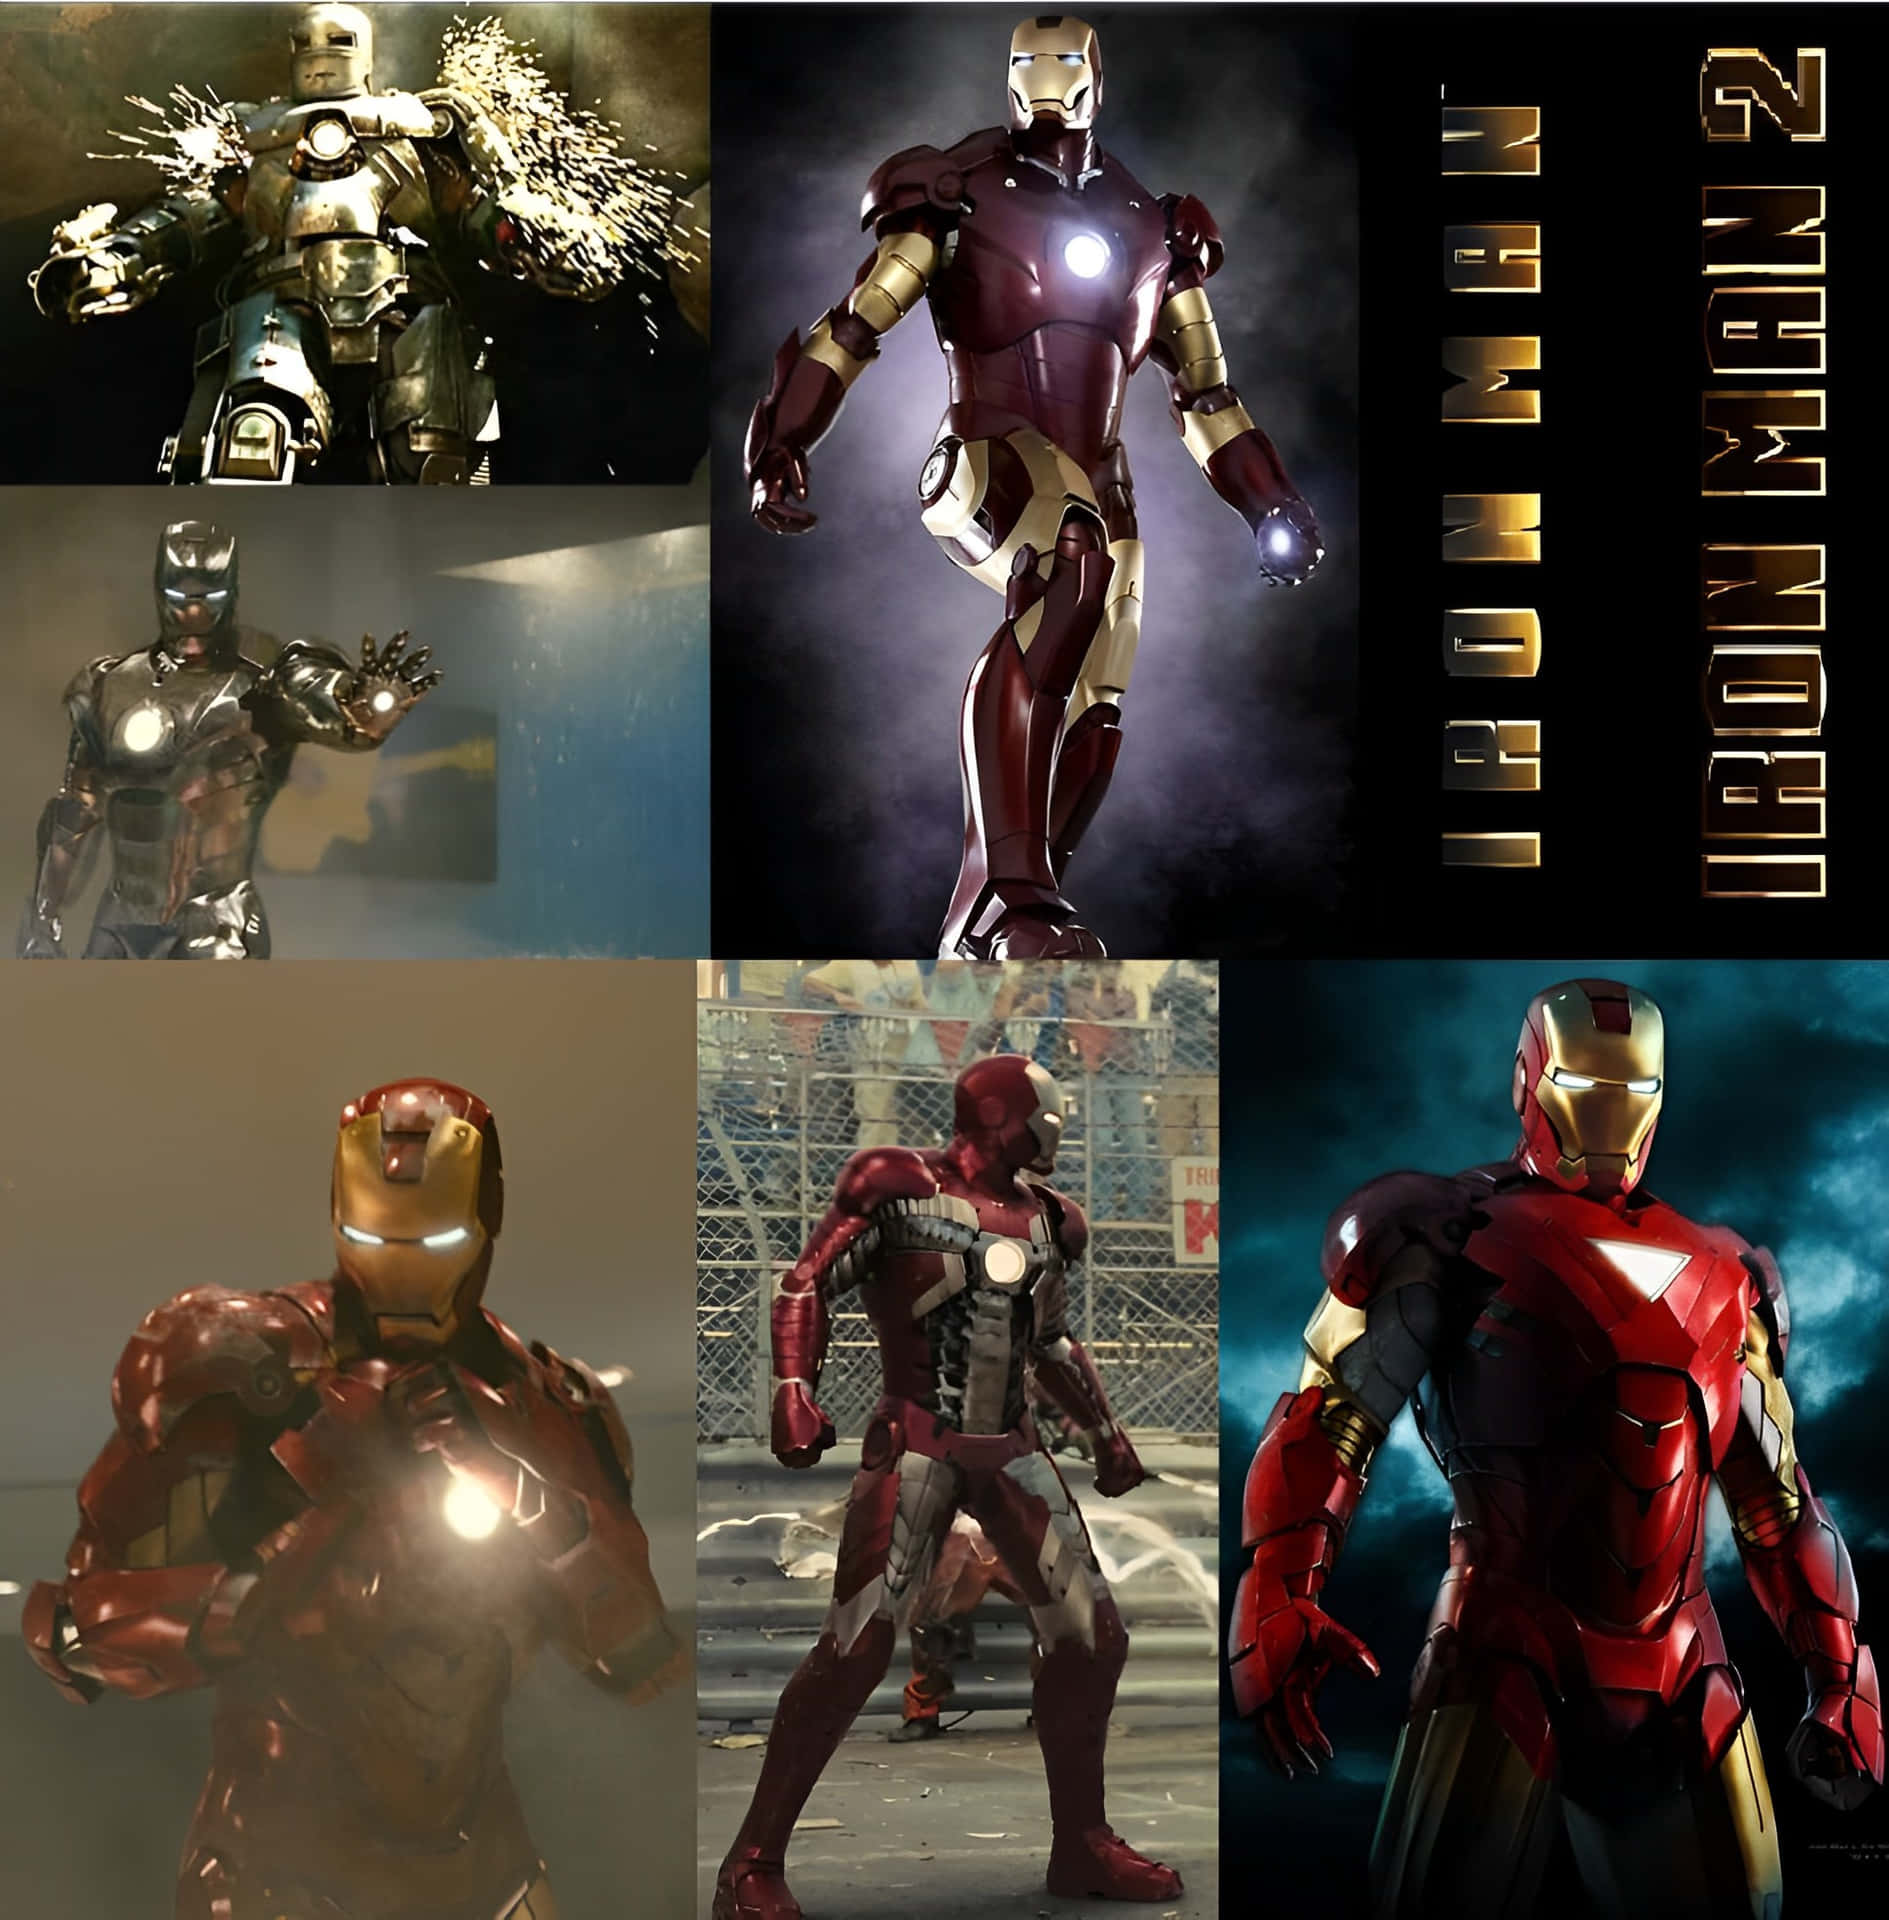 iron man 2 movie wallpaper